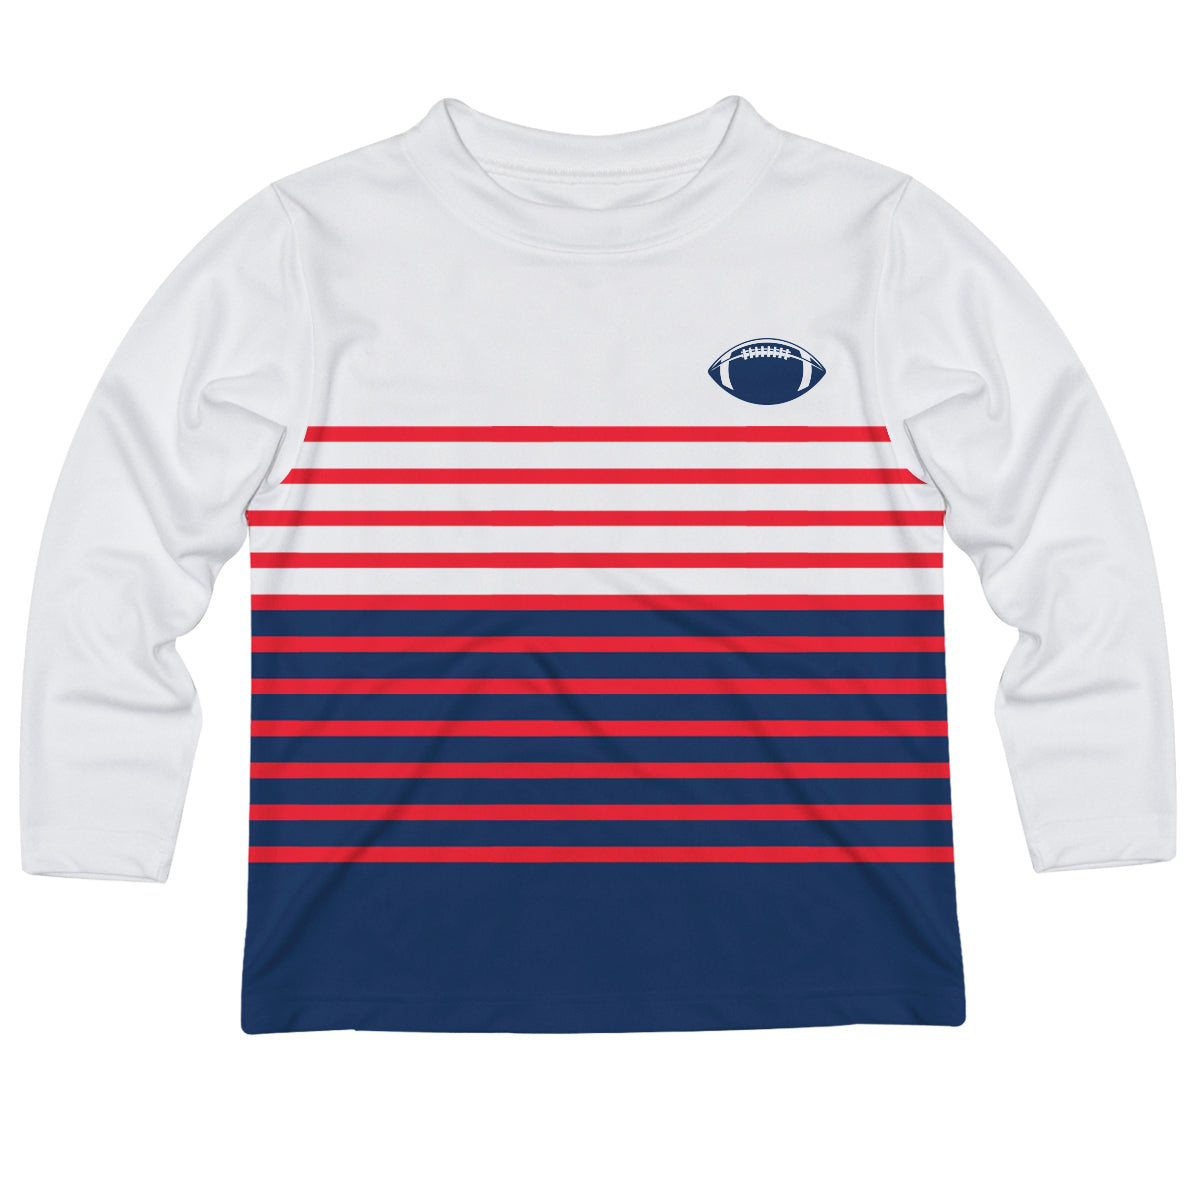 Football Navy and White Long Sleeve Tee Shirt